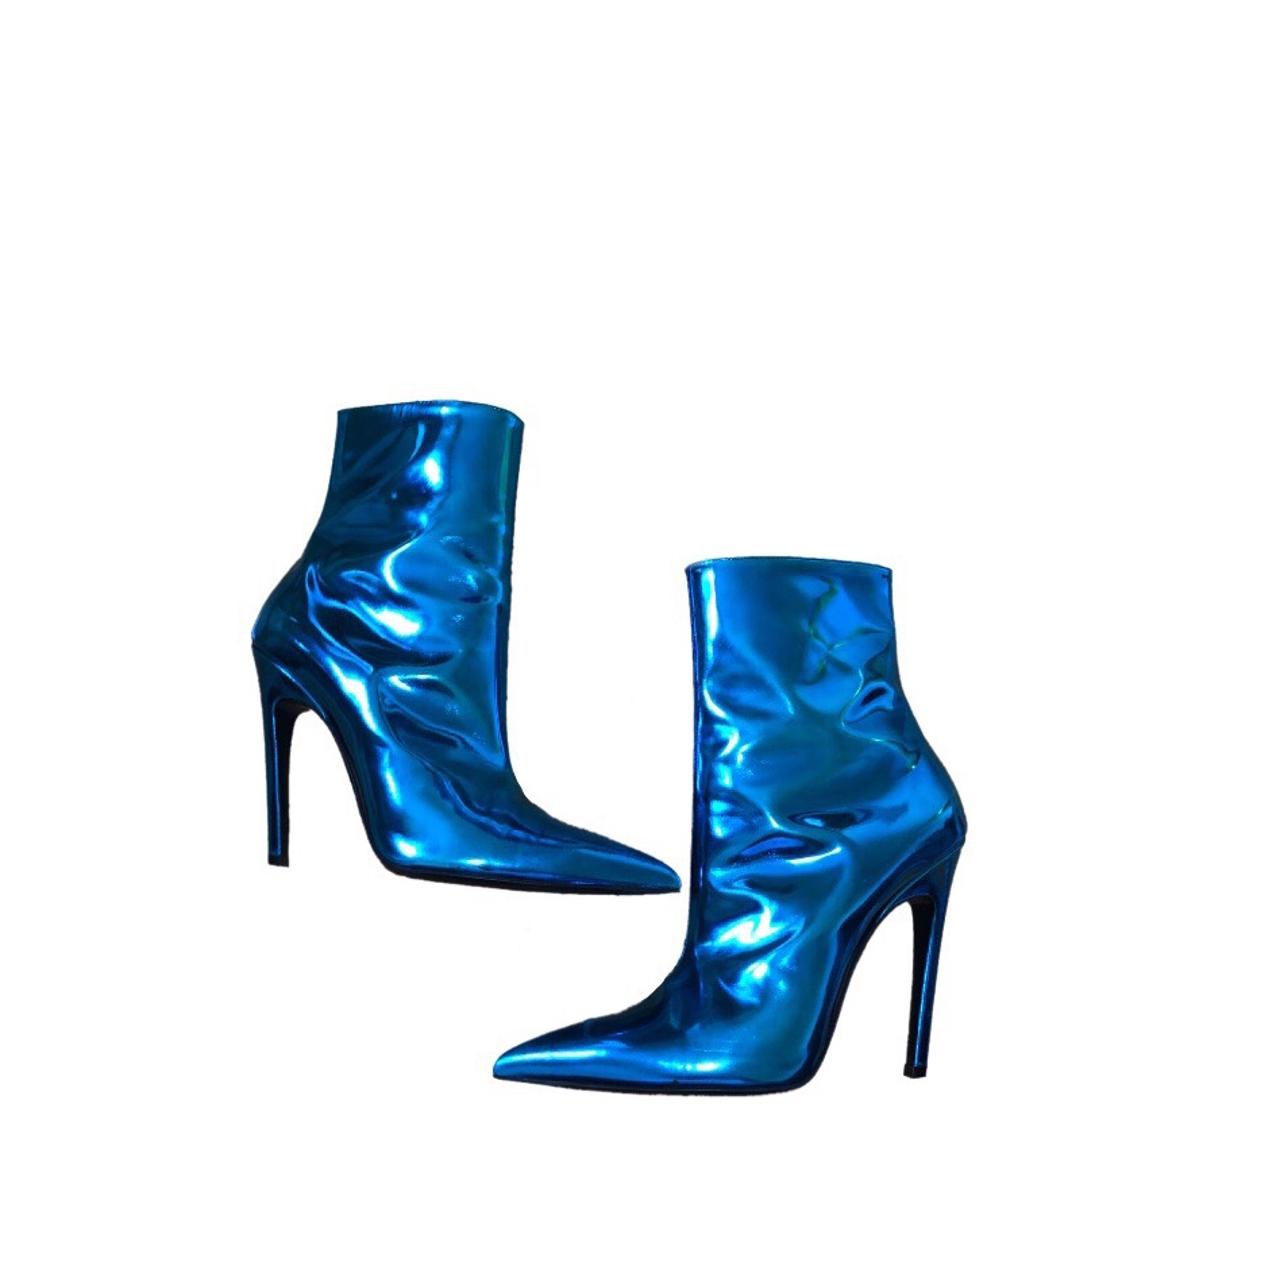 Genuine Balenciaga mirrored ankle boots /... - Depop